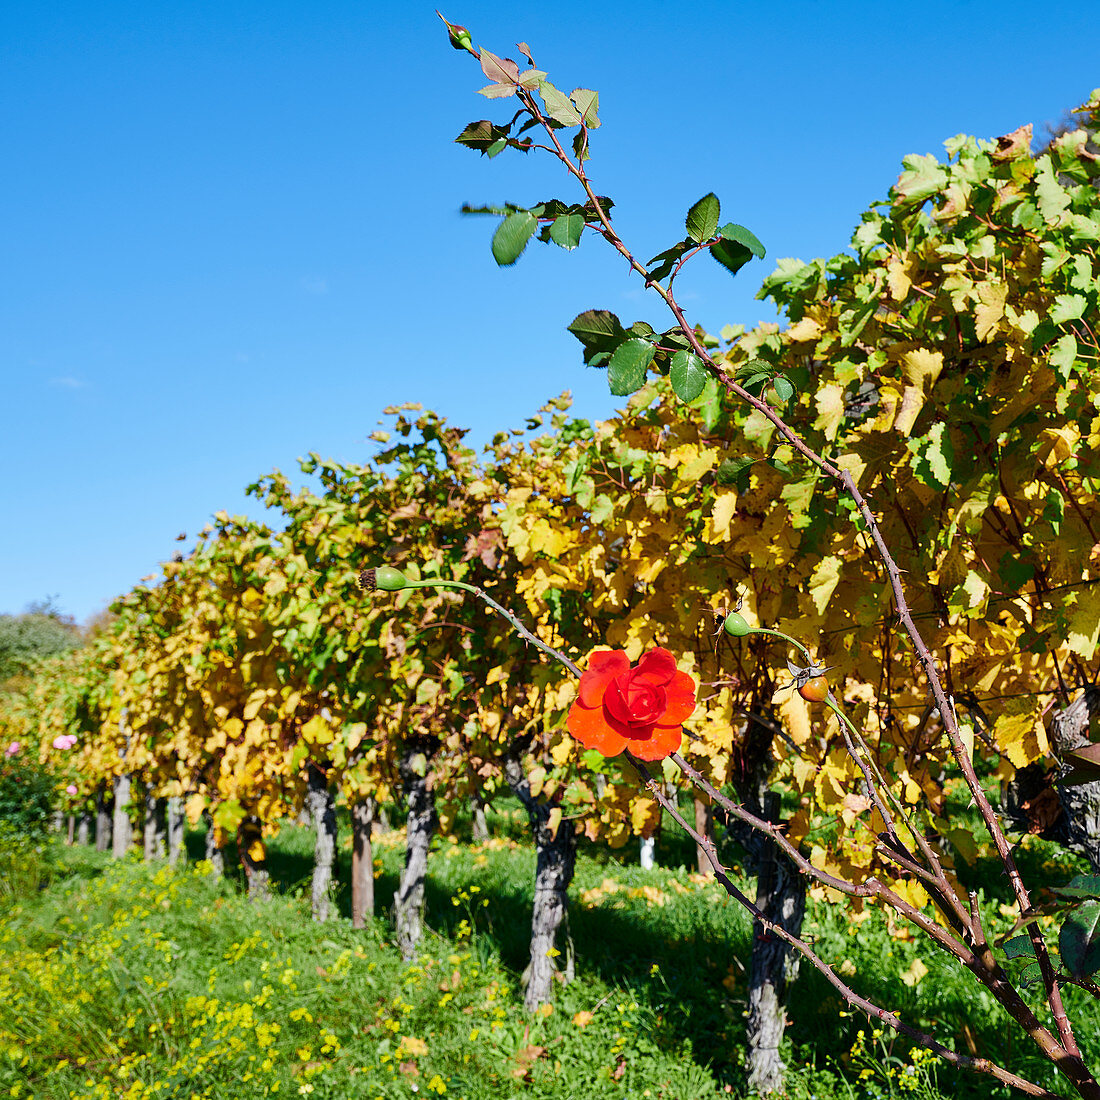 Autumn vineyard on the Middle Rhine, Unkel, Germany